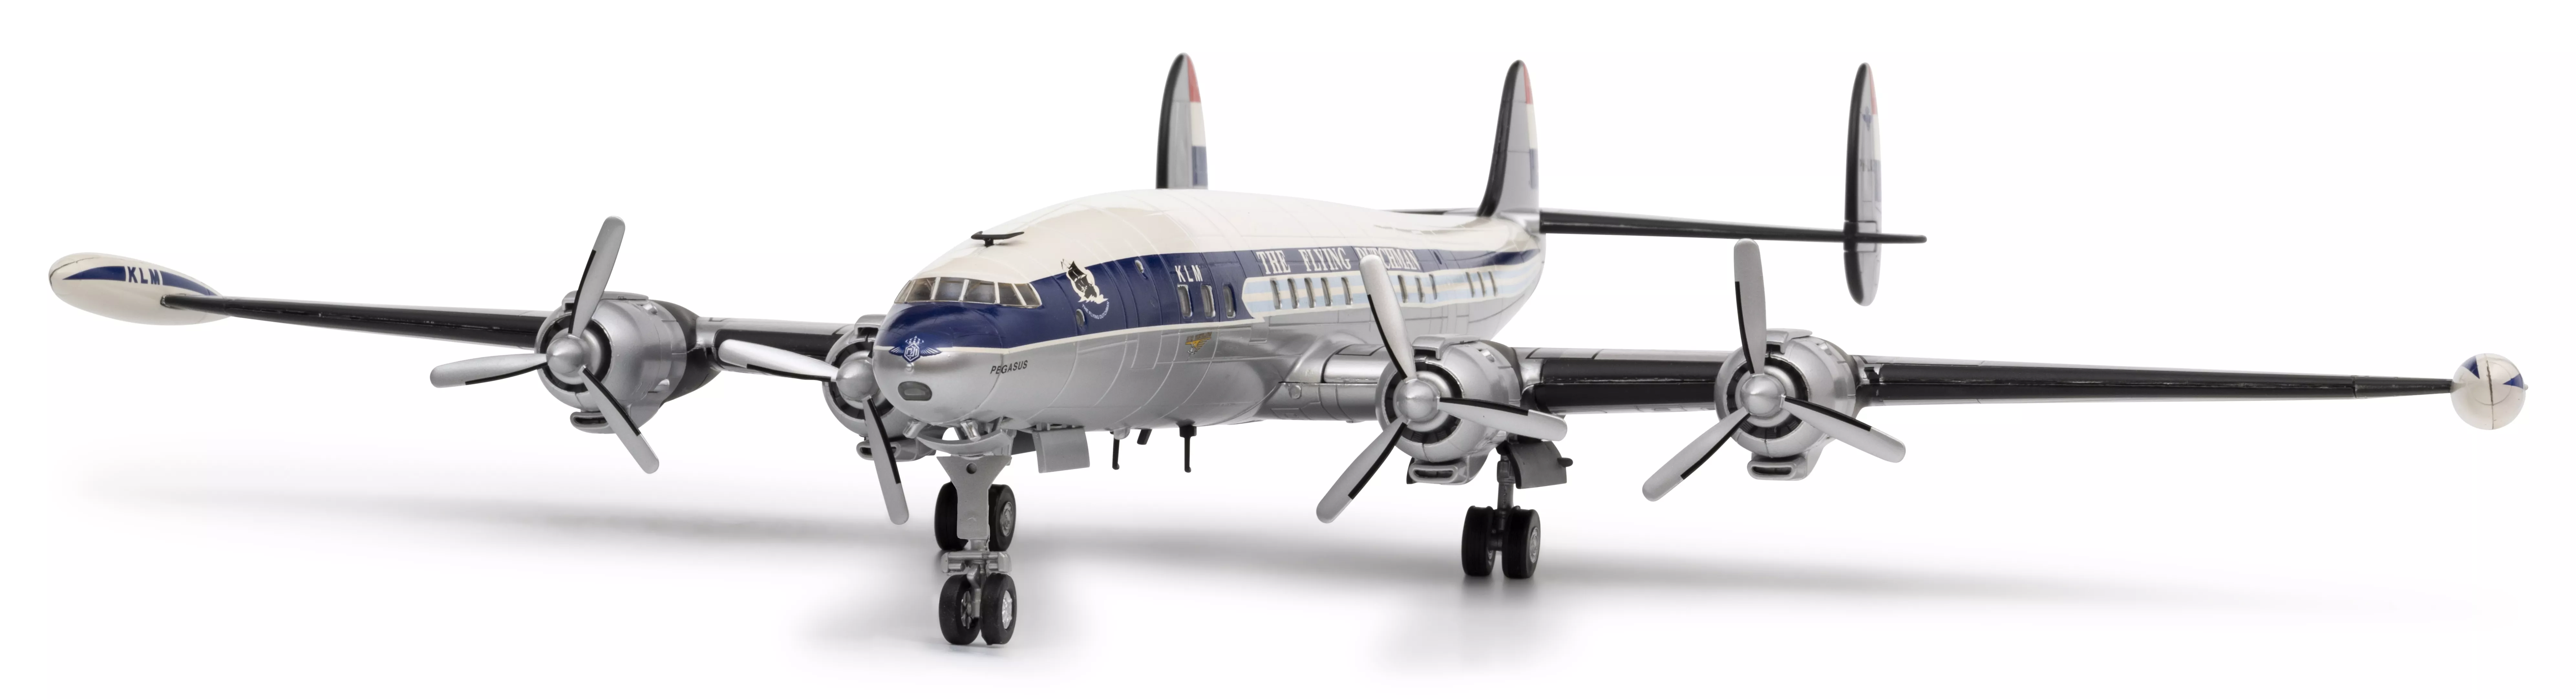 Schuco Lockheed L1049G KLM Modellflugzeug Weiß Blau 1:72 403552001